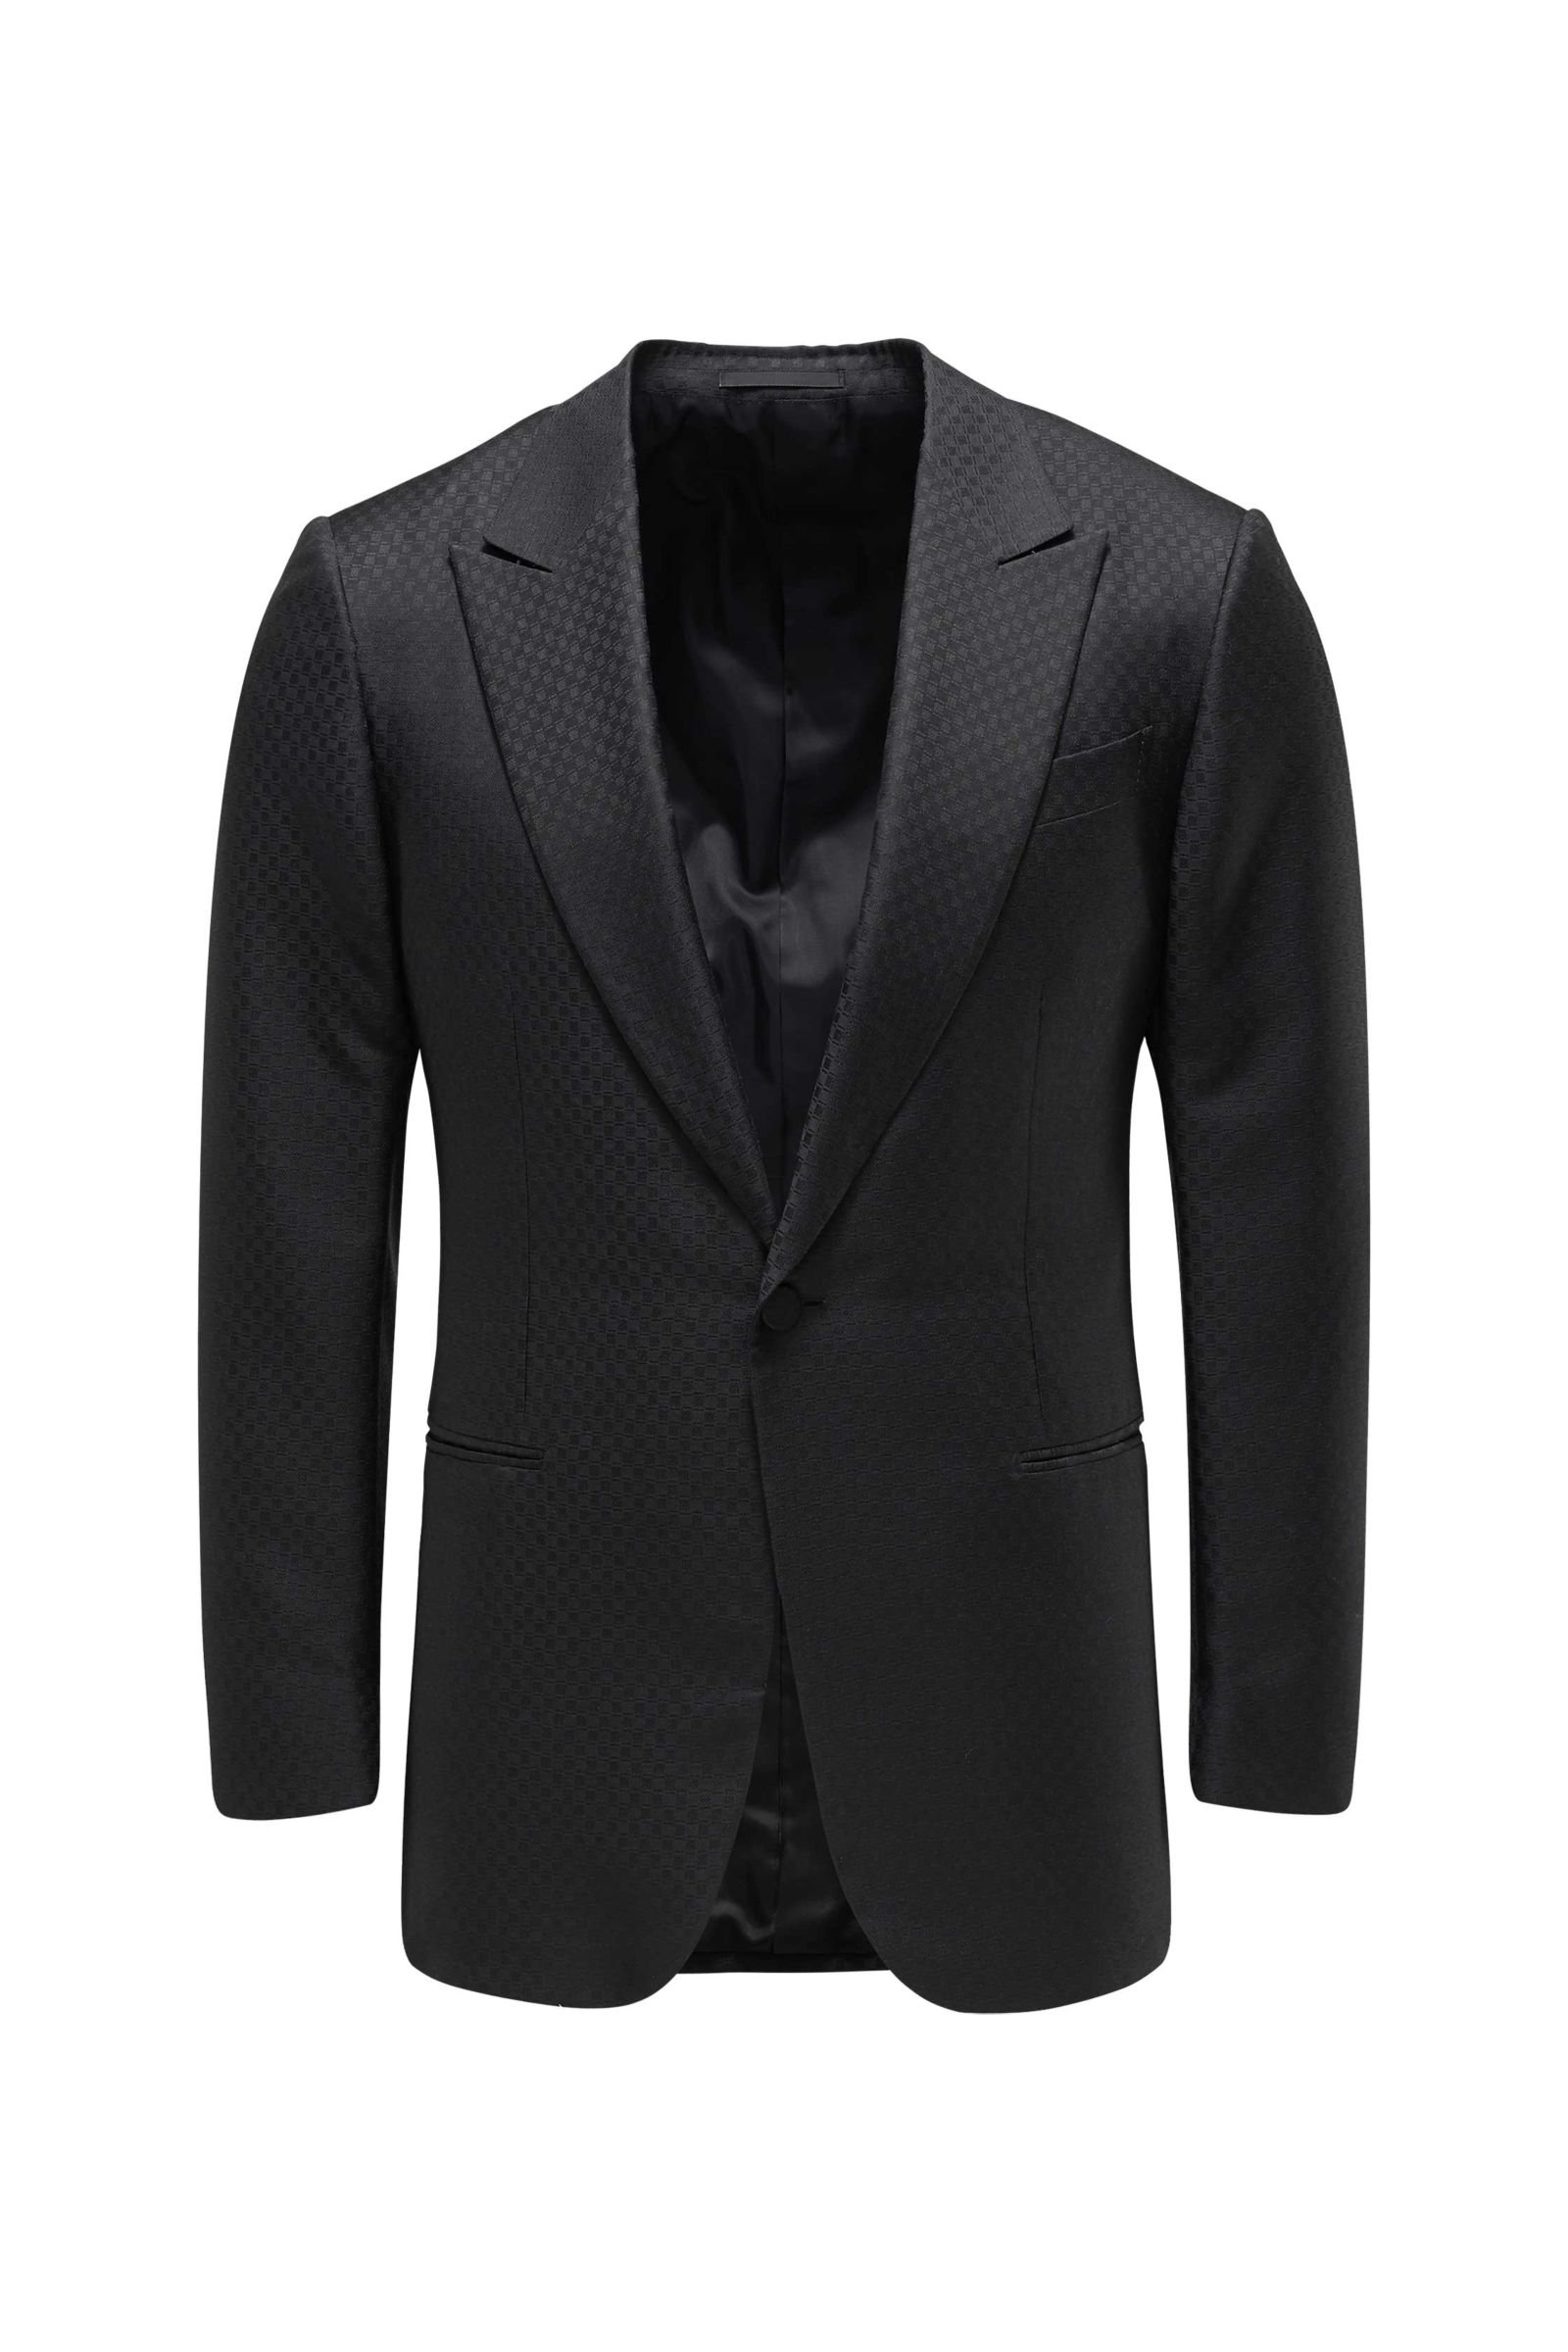 Tuxedo smart-casual jacket 'Venezia' black checked